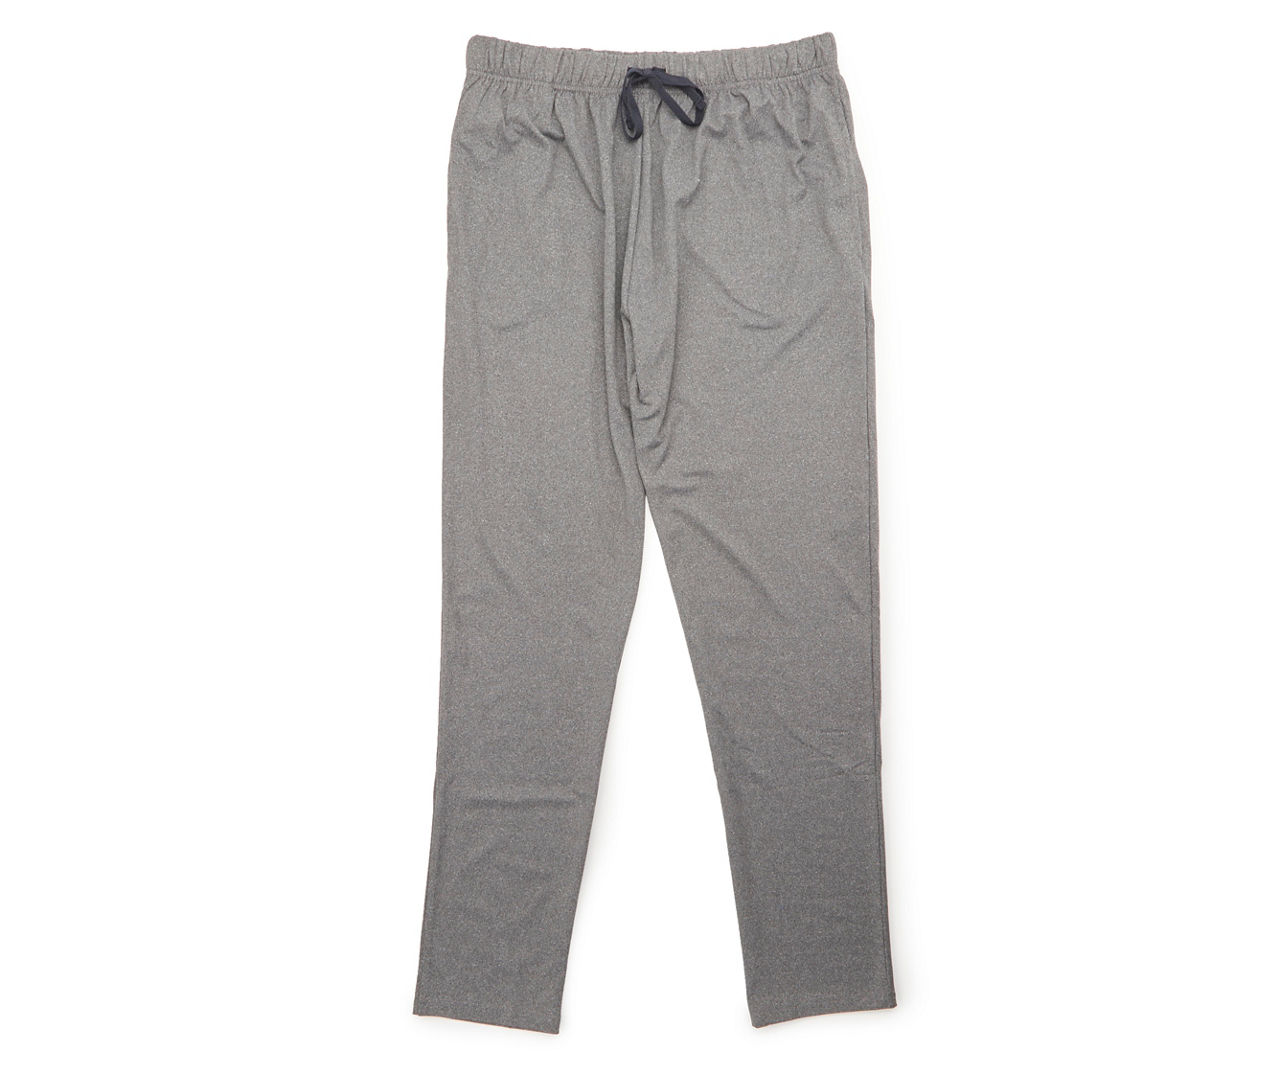 Men's Size X-Large Charcoal Soft Lounge Pants